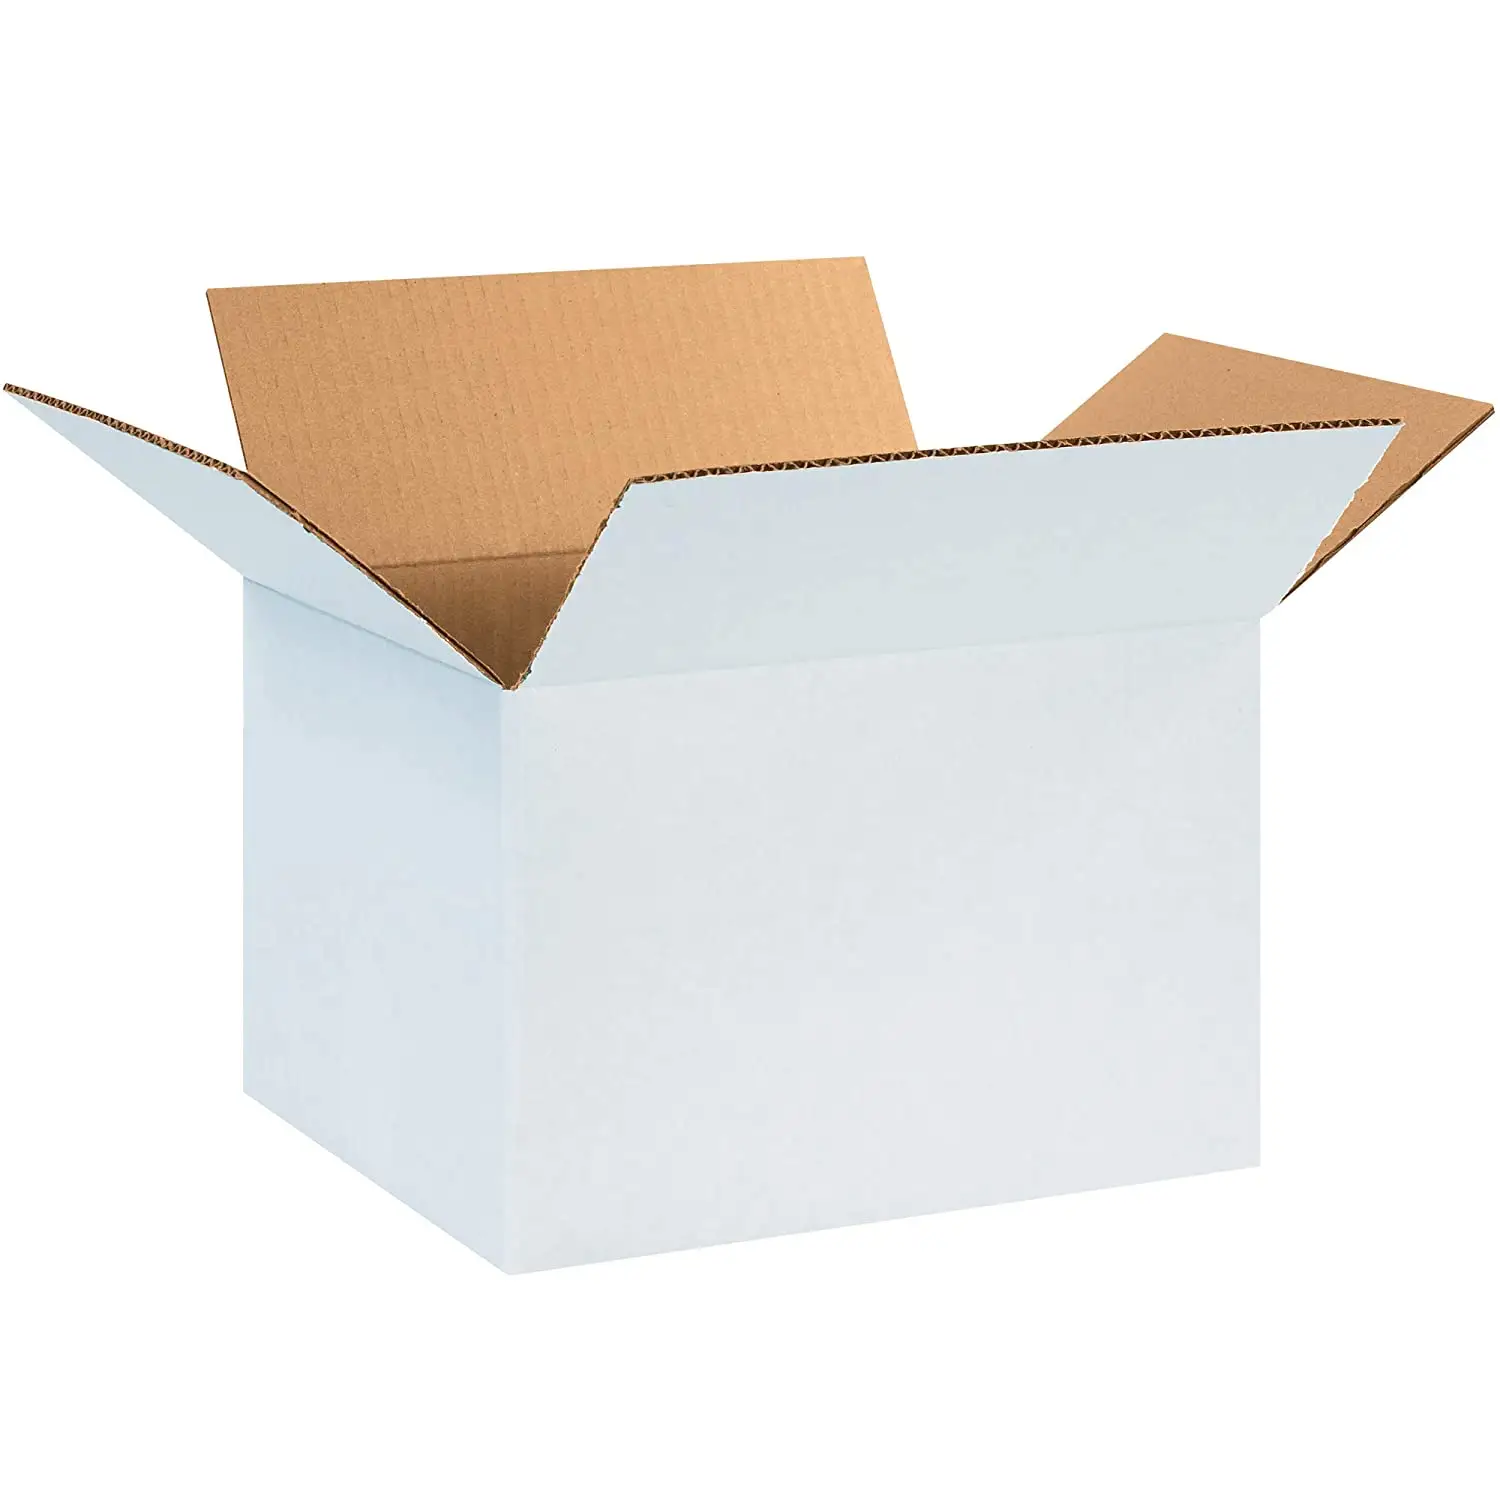 Caixa de embalagem de embalagem personalizada, grande caixa de embalagem de embalagem eco